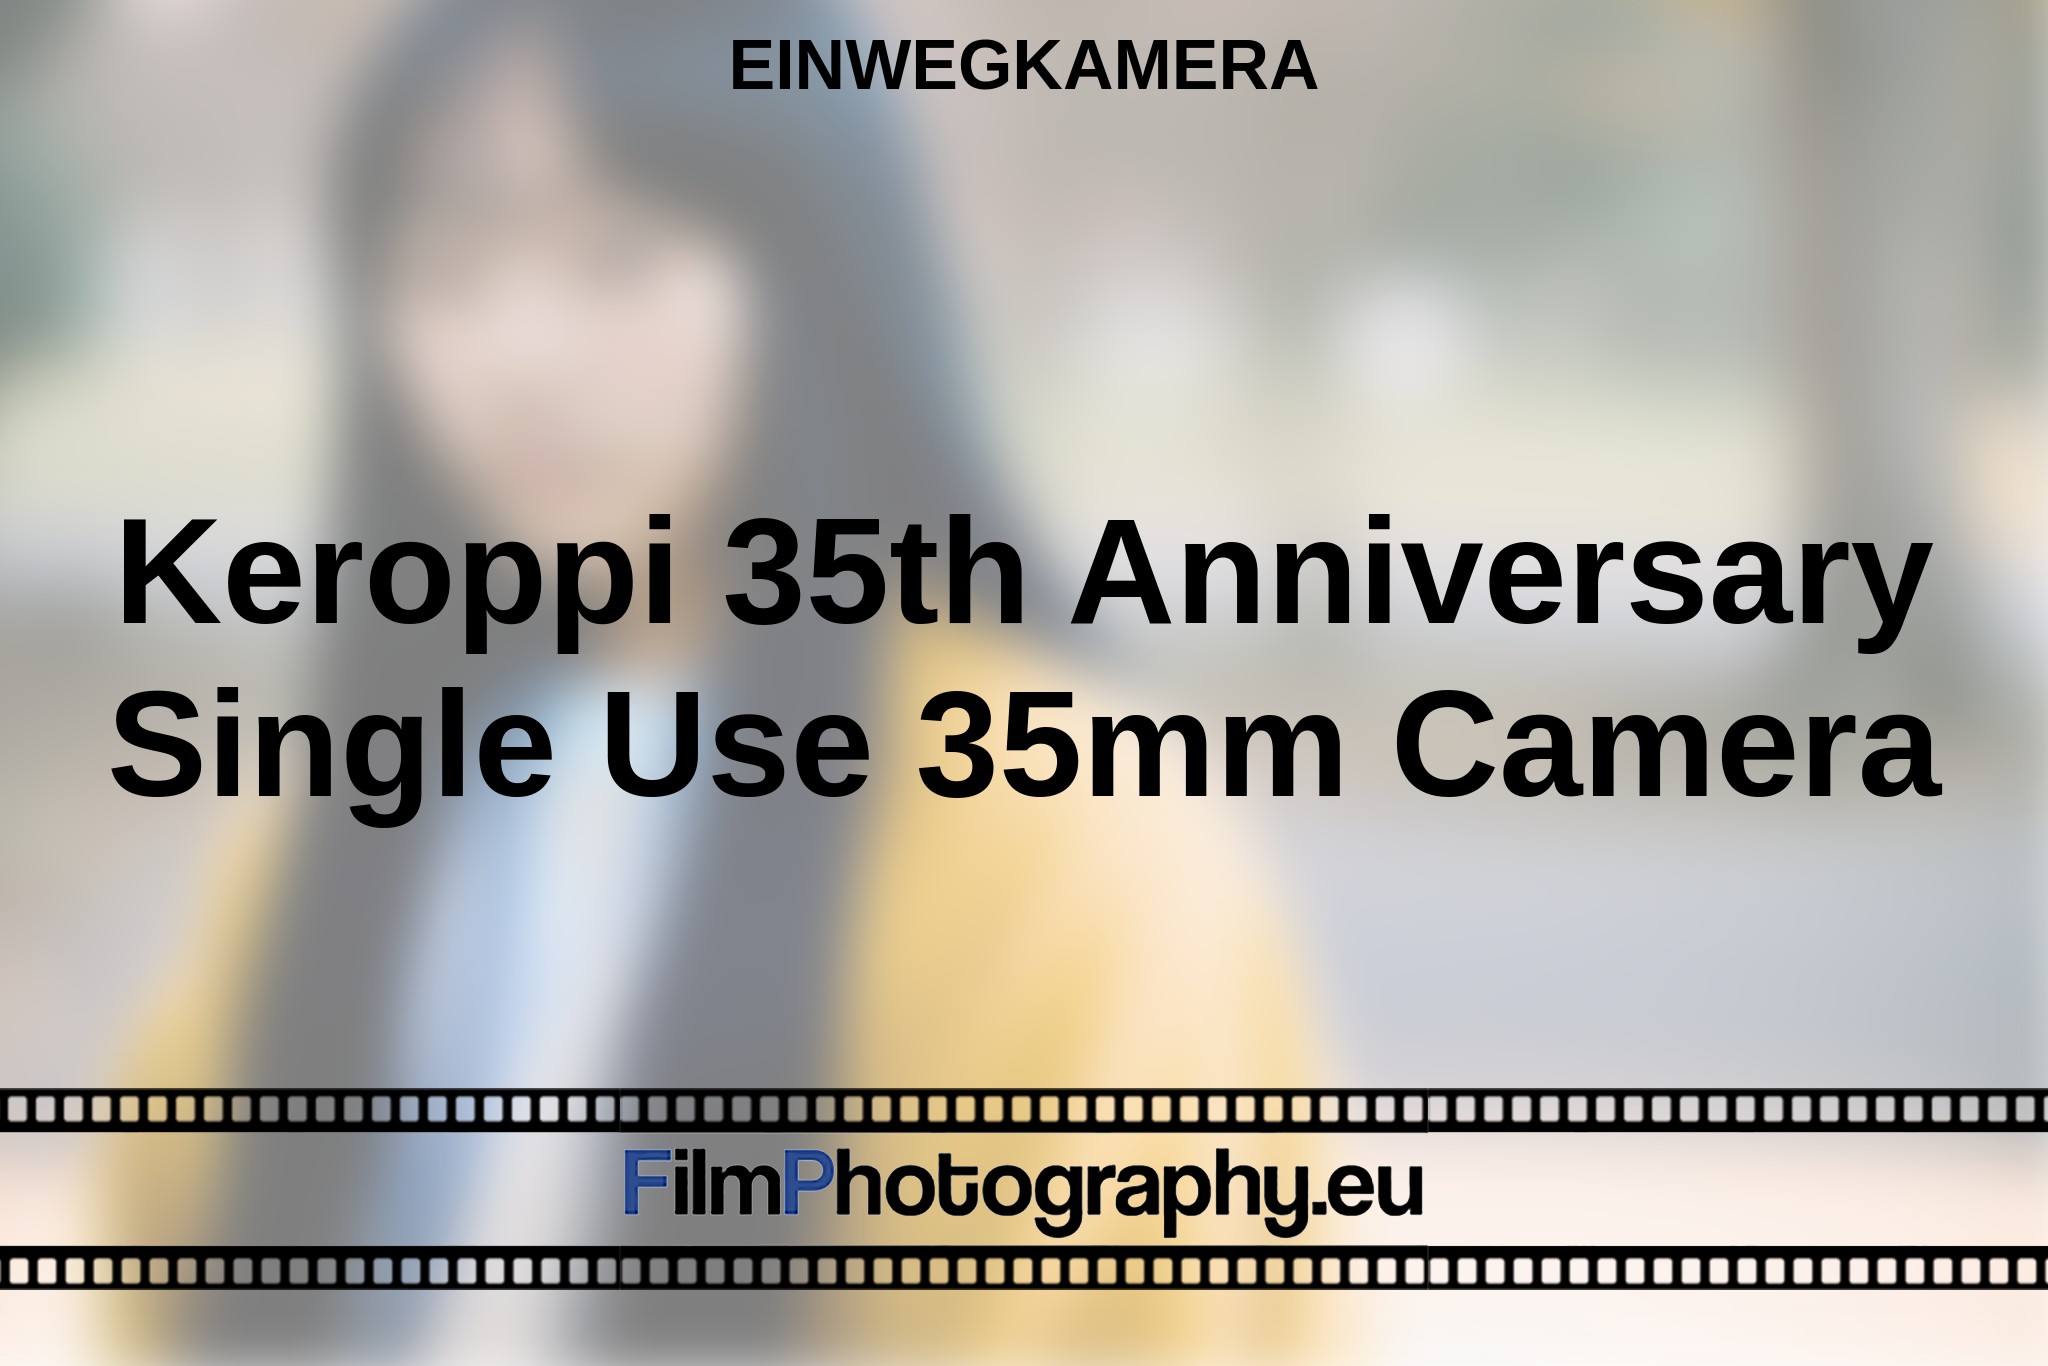 keroppi-35th-anniversary-single-use-35mm-camera-einwegkamera-bnv.jpg